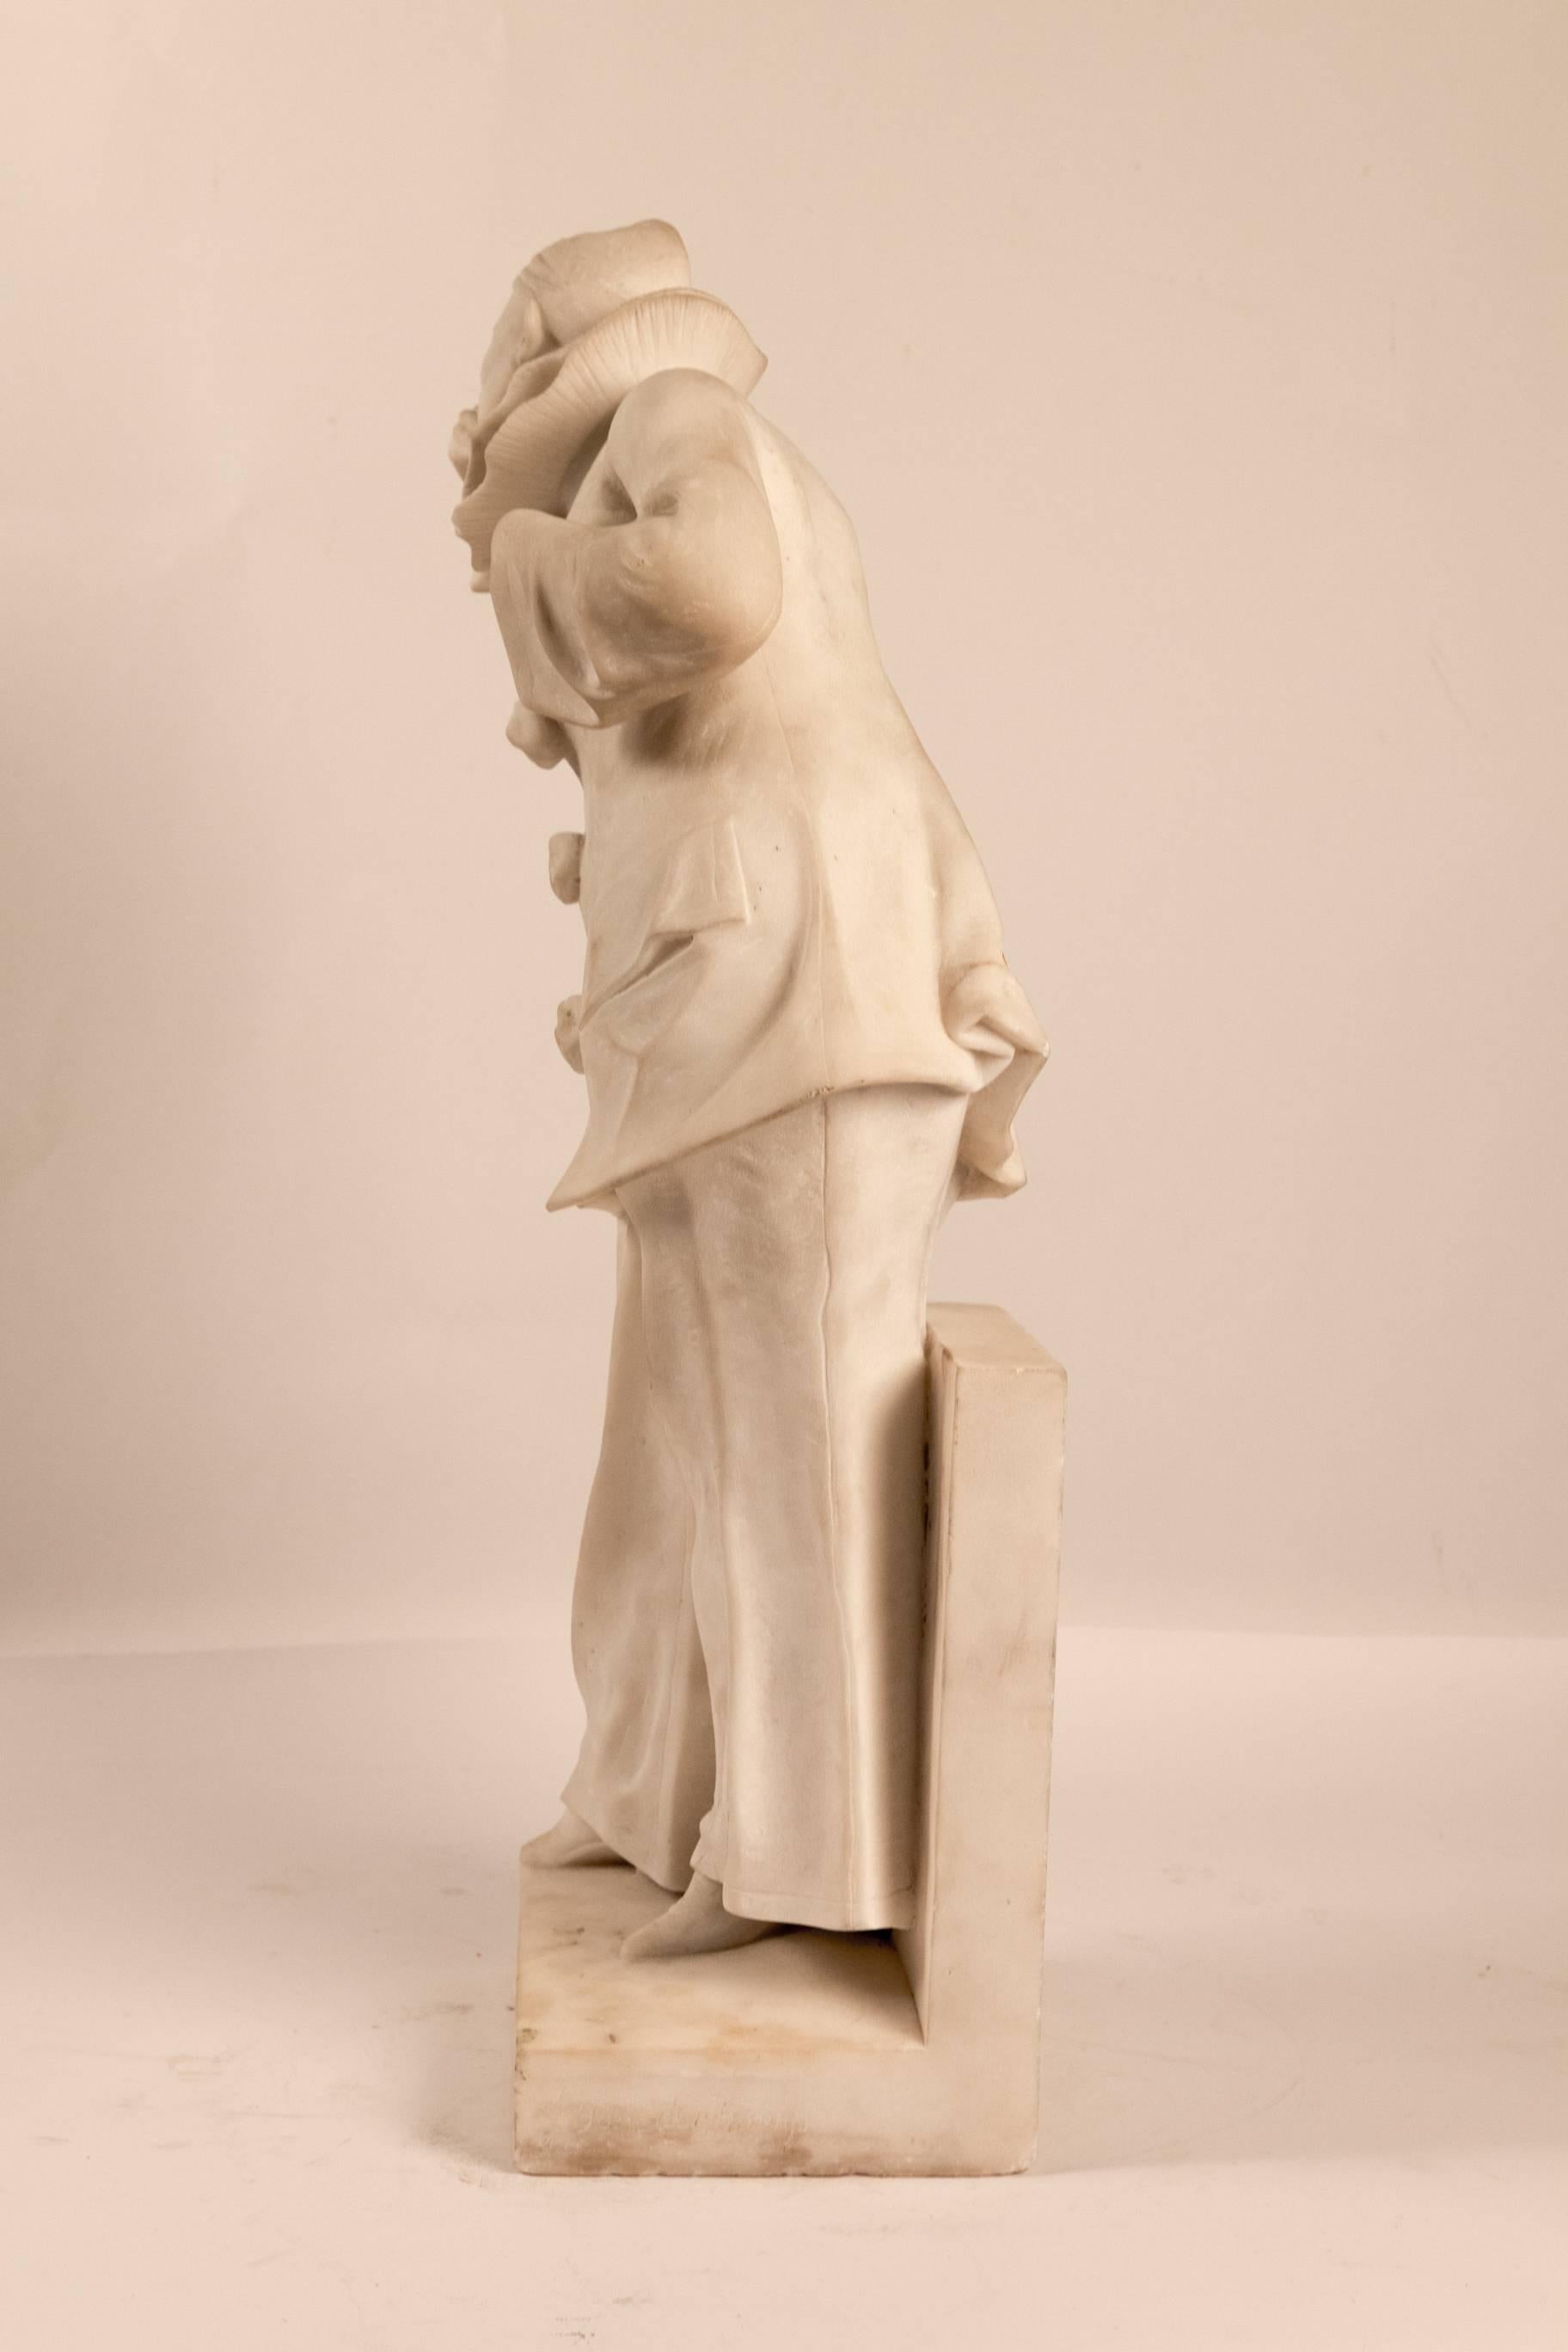 Hand-Carved Belgium Marble Pierrot Sculpture by John Mayne Van Der Kemp, circa 1910-1920